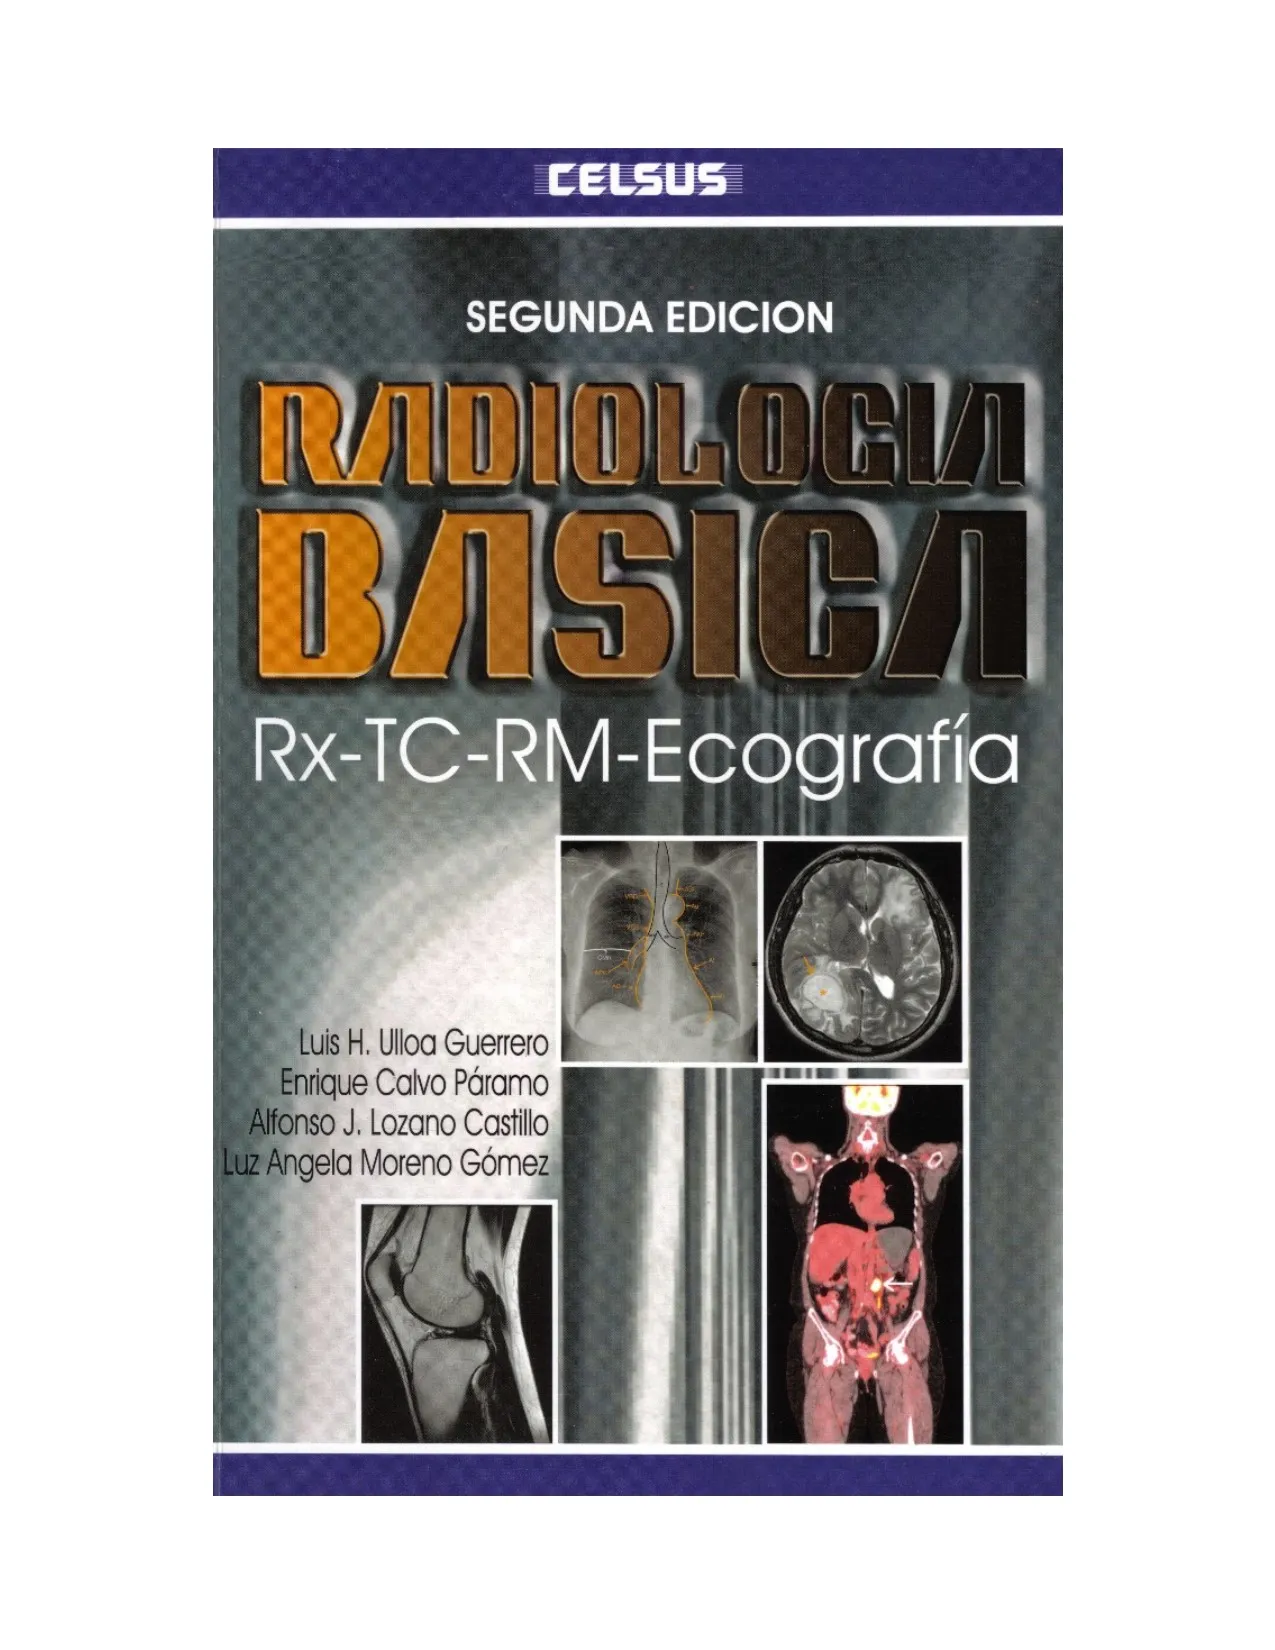 Radiologia Basica